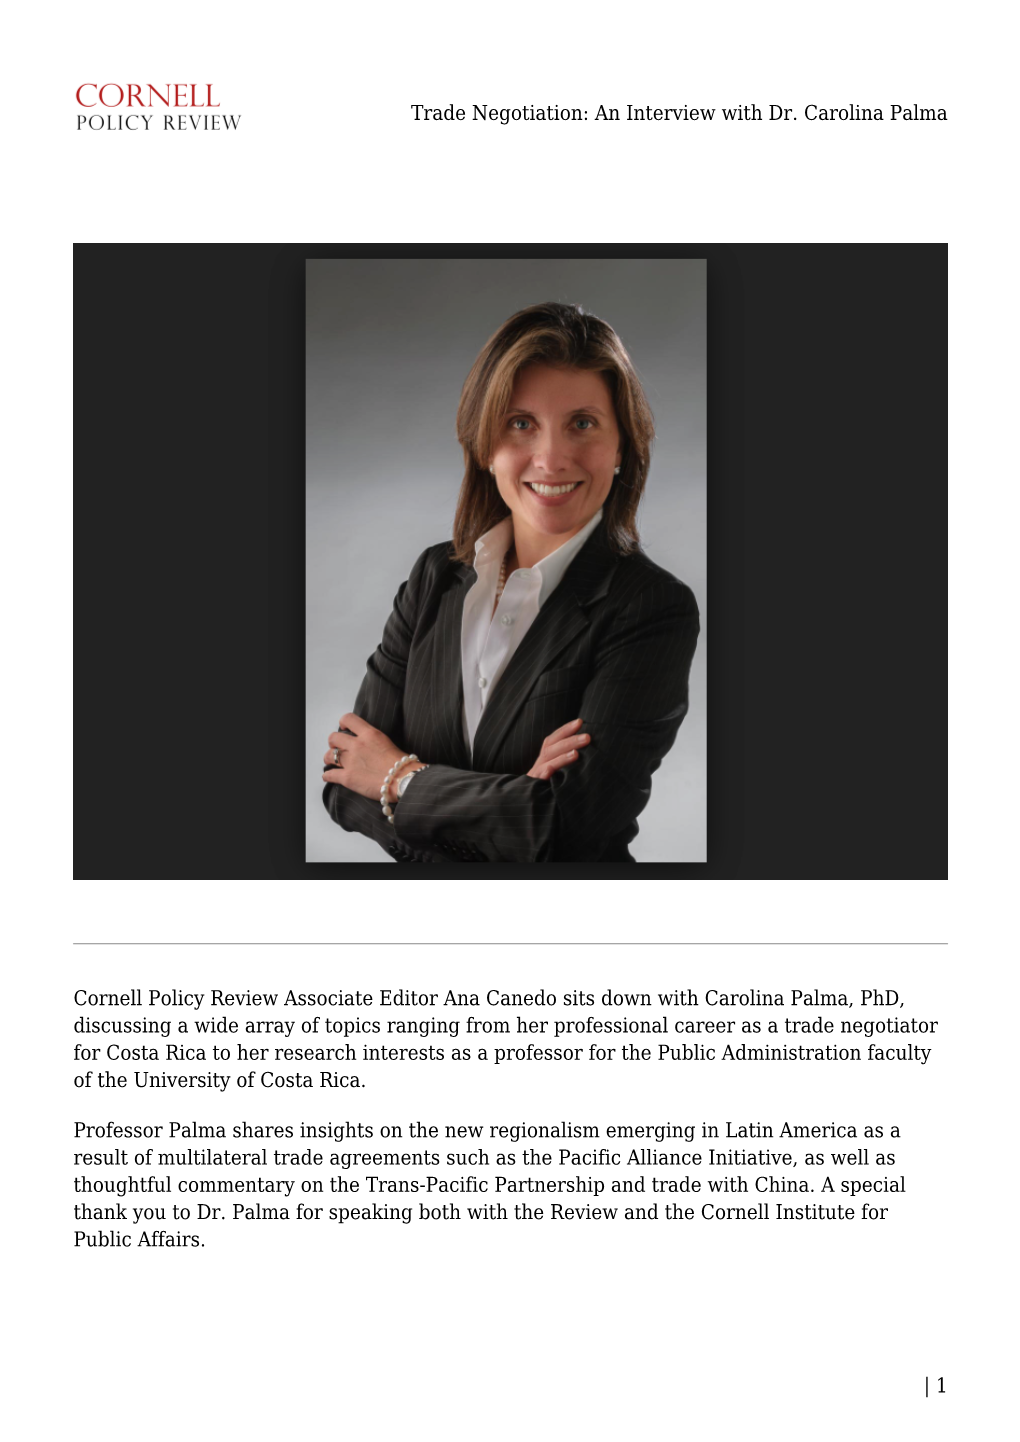 Trade Negotiation: an Interview with Dr. Carolina Palma